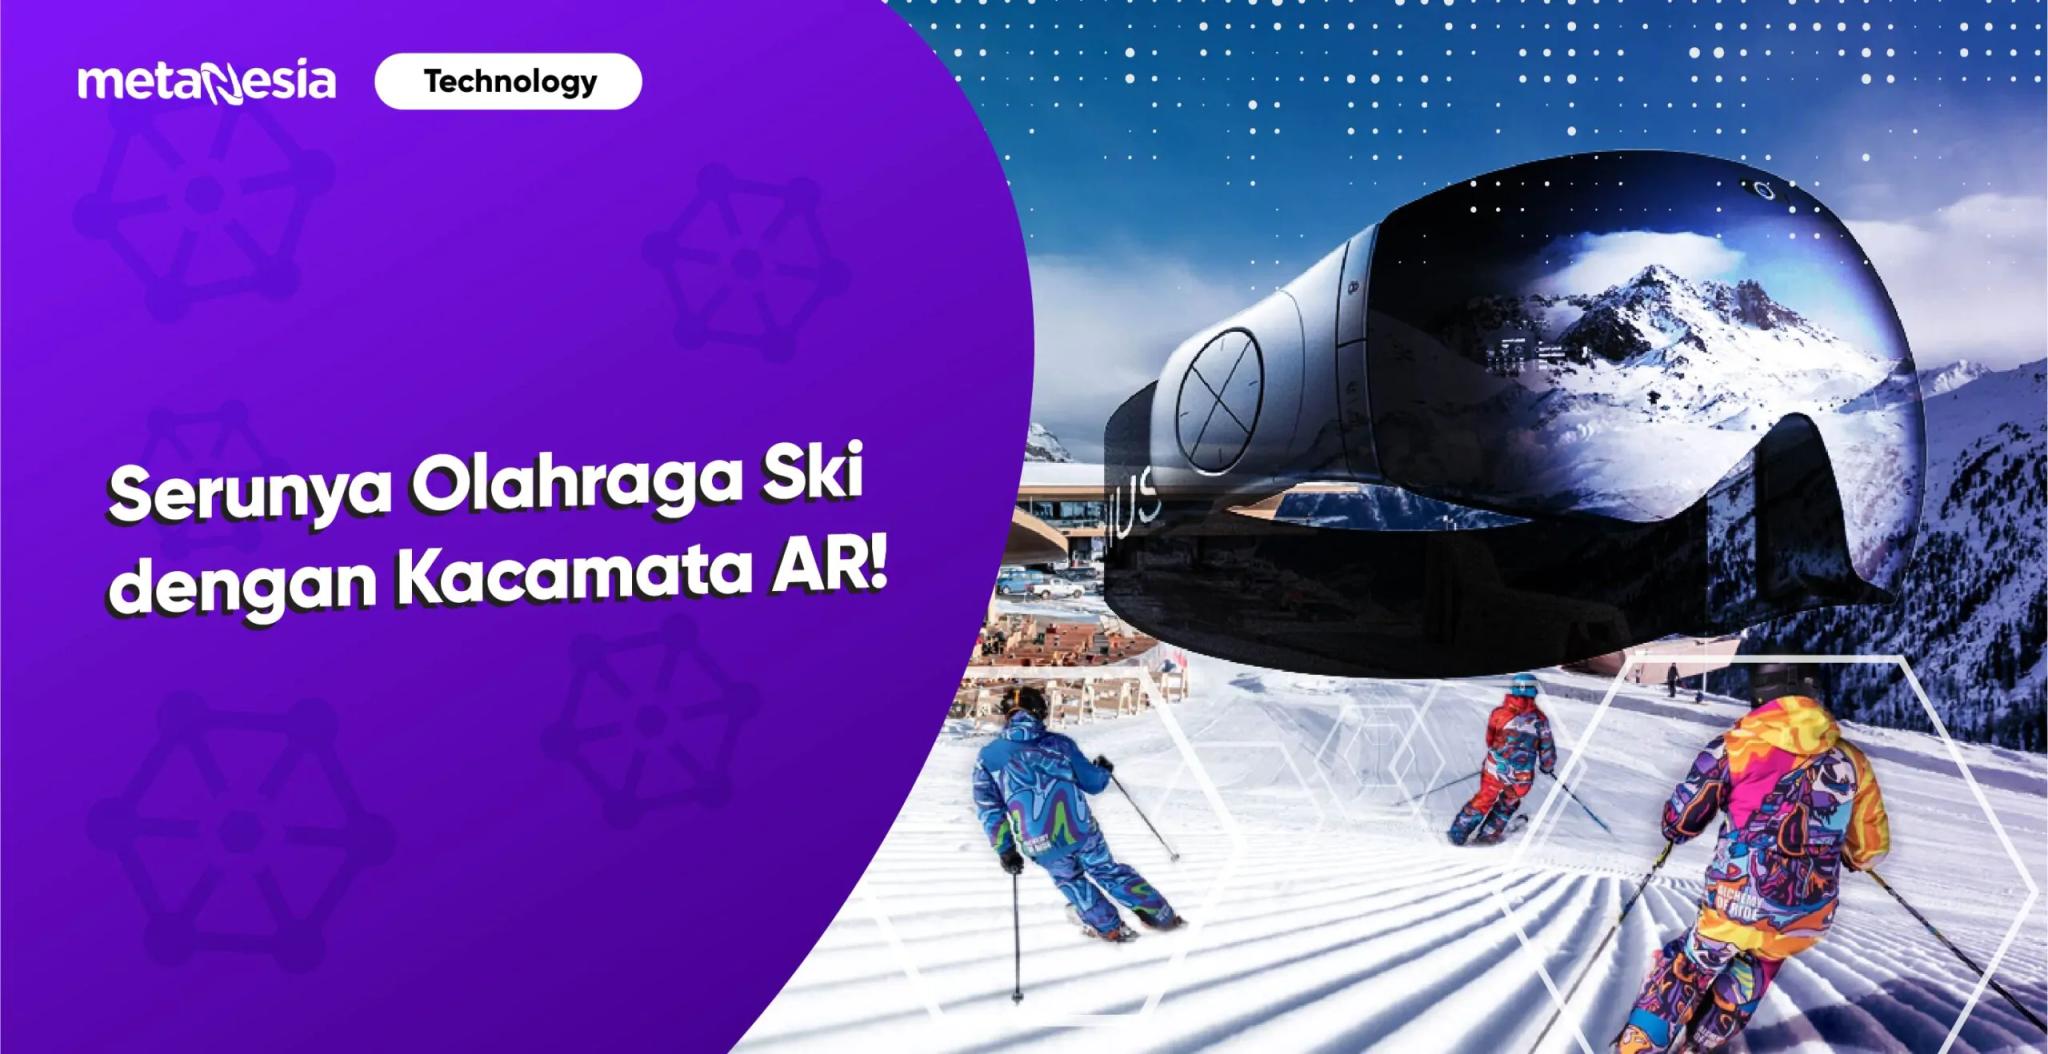 Kacamata AR Untuk Ski: Serunya Olahraga Dengan Bantuan Teknologi